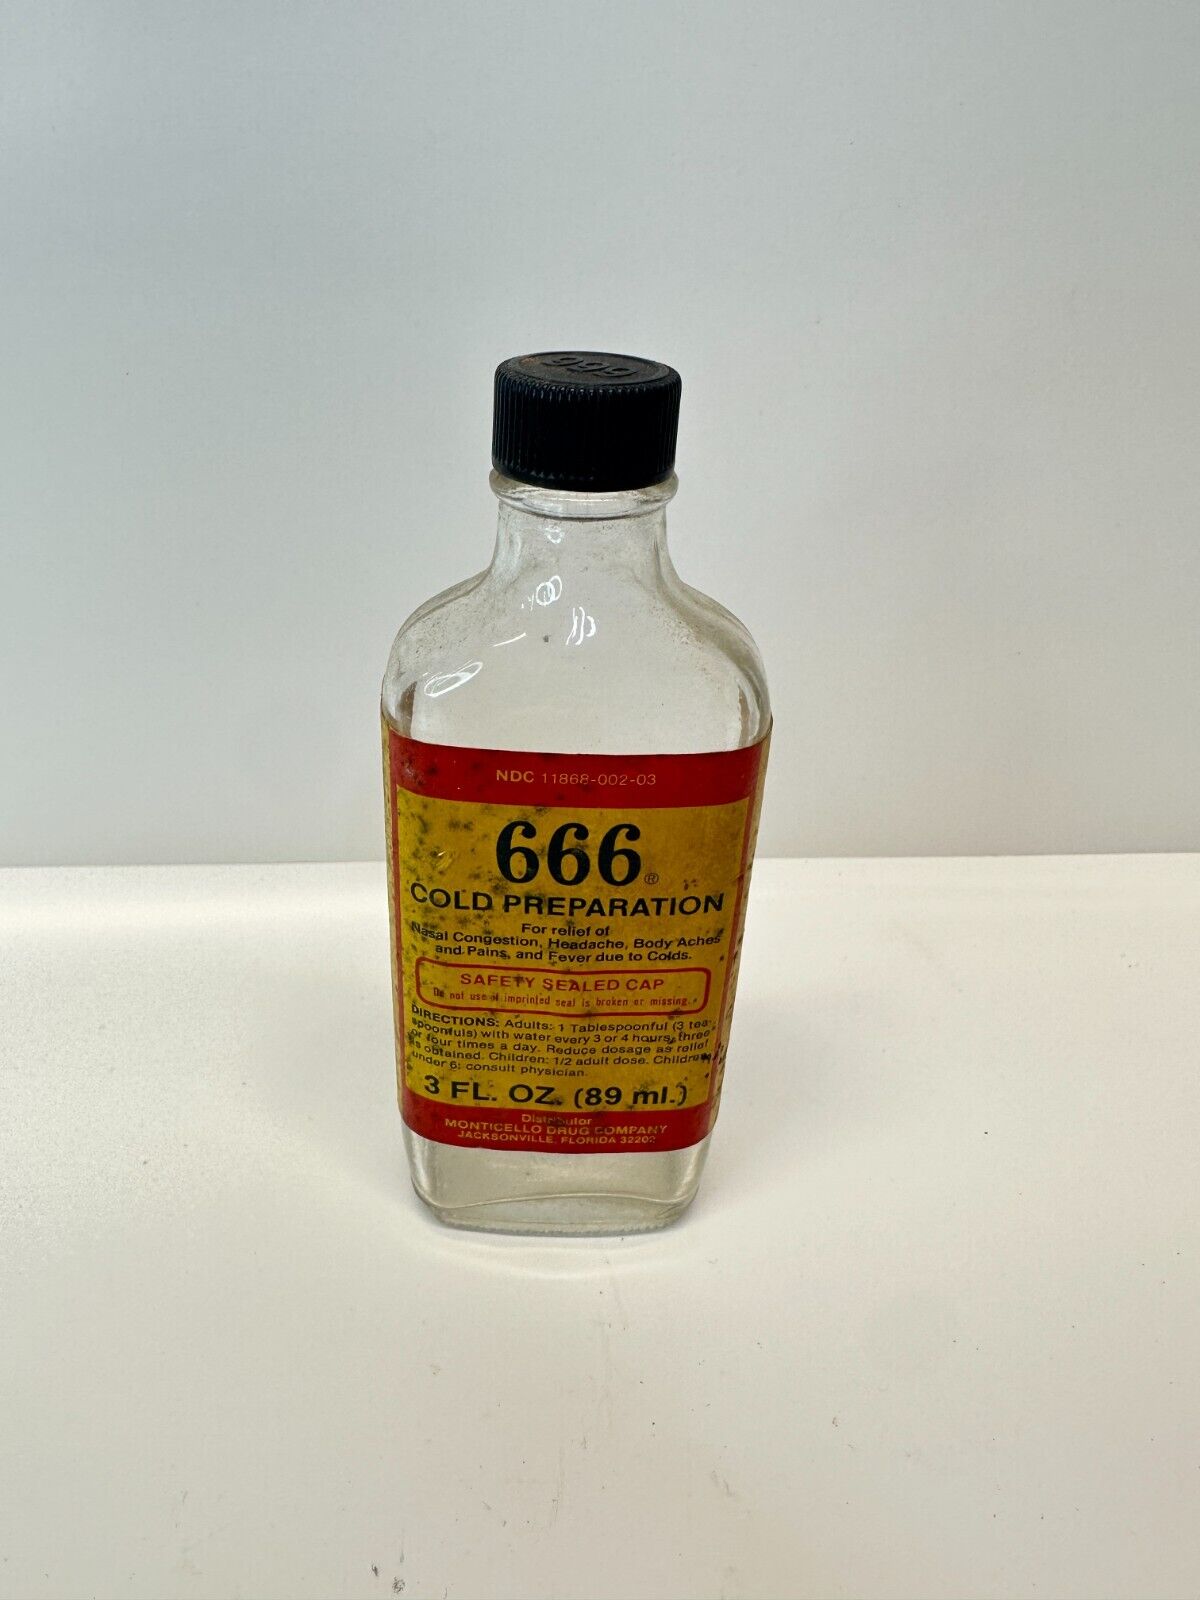 Vintage 666 Cold Preparation Analgesic Medicine Empty Bottle 3 FL OZ 89ml Rare